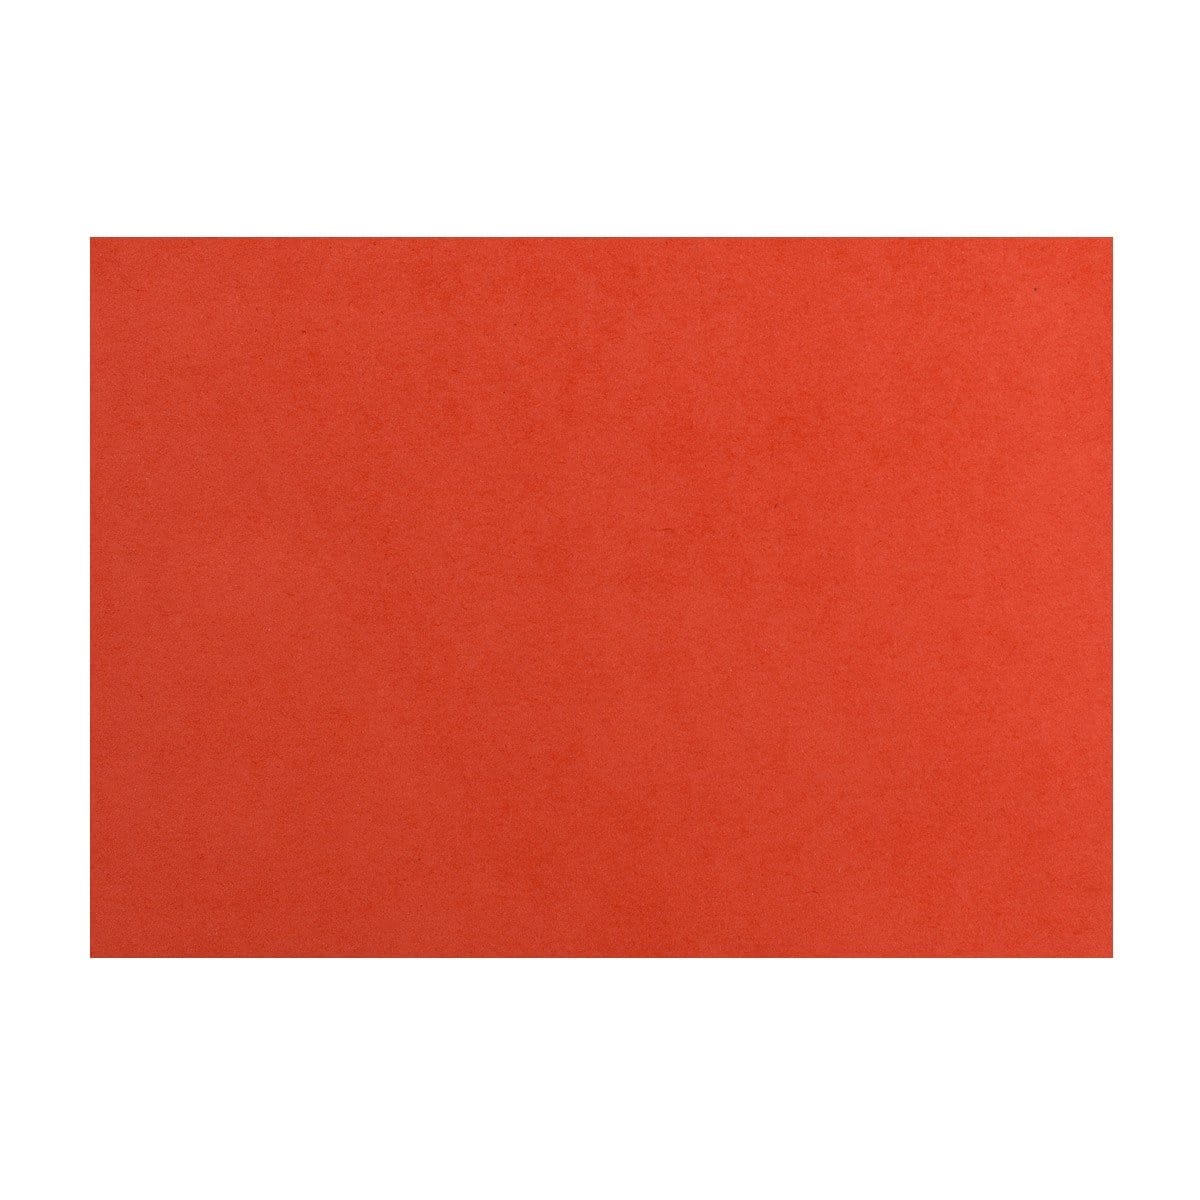 products/c6-bright-red-vflap-envelopesb.jpg